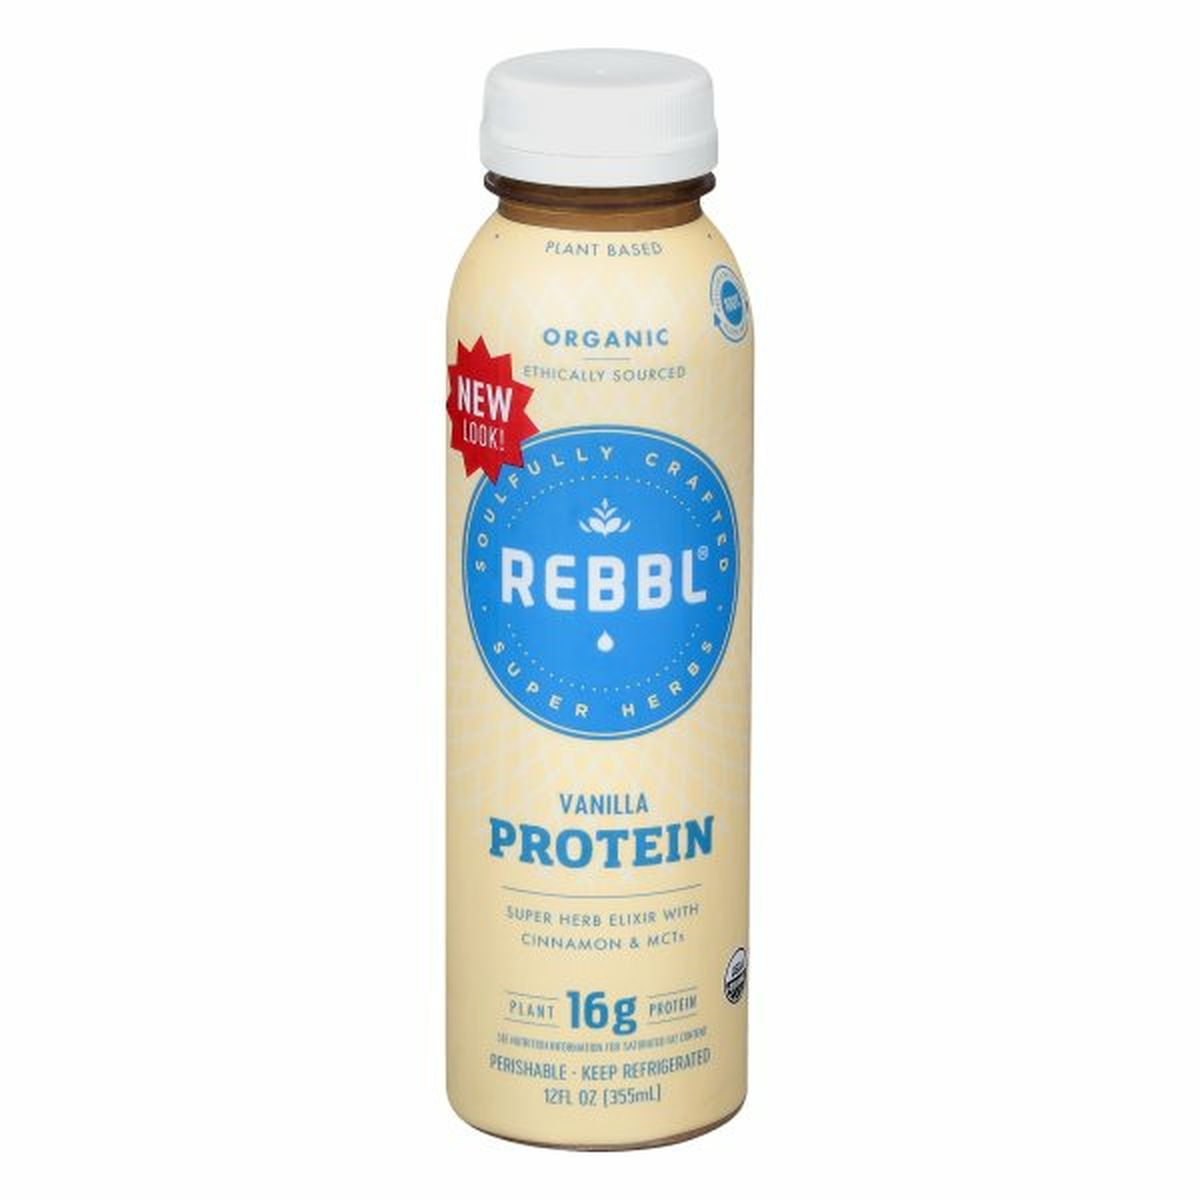 Calories in REBBL Protein Elixir, Organic, Vanilla